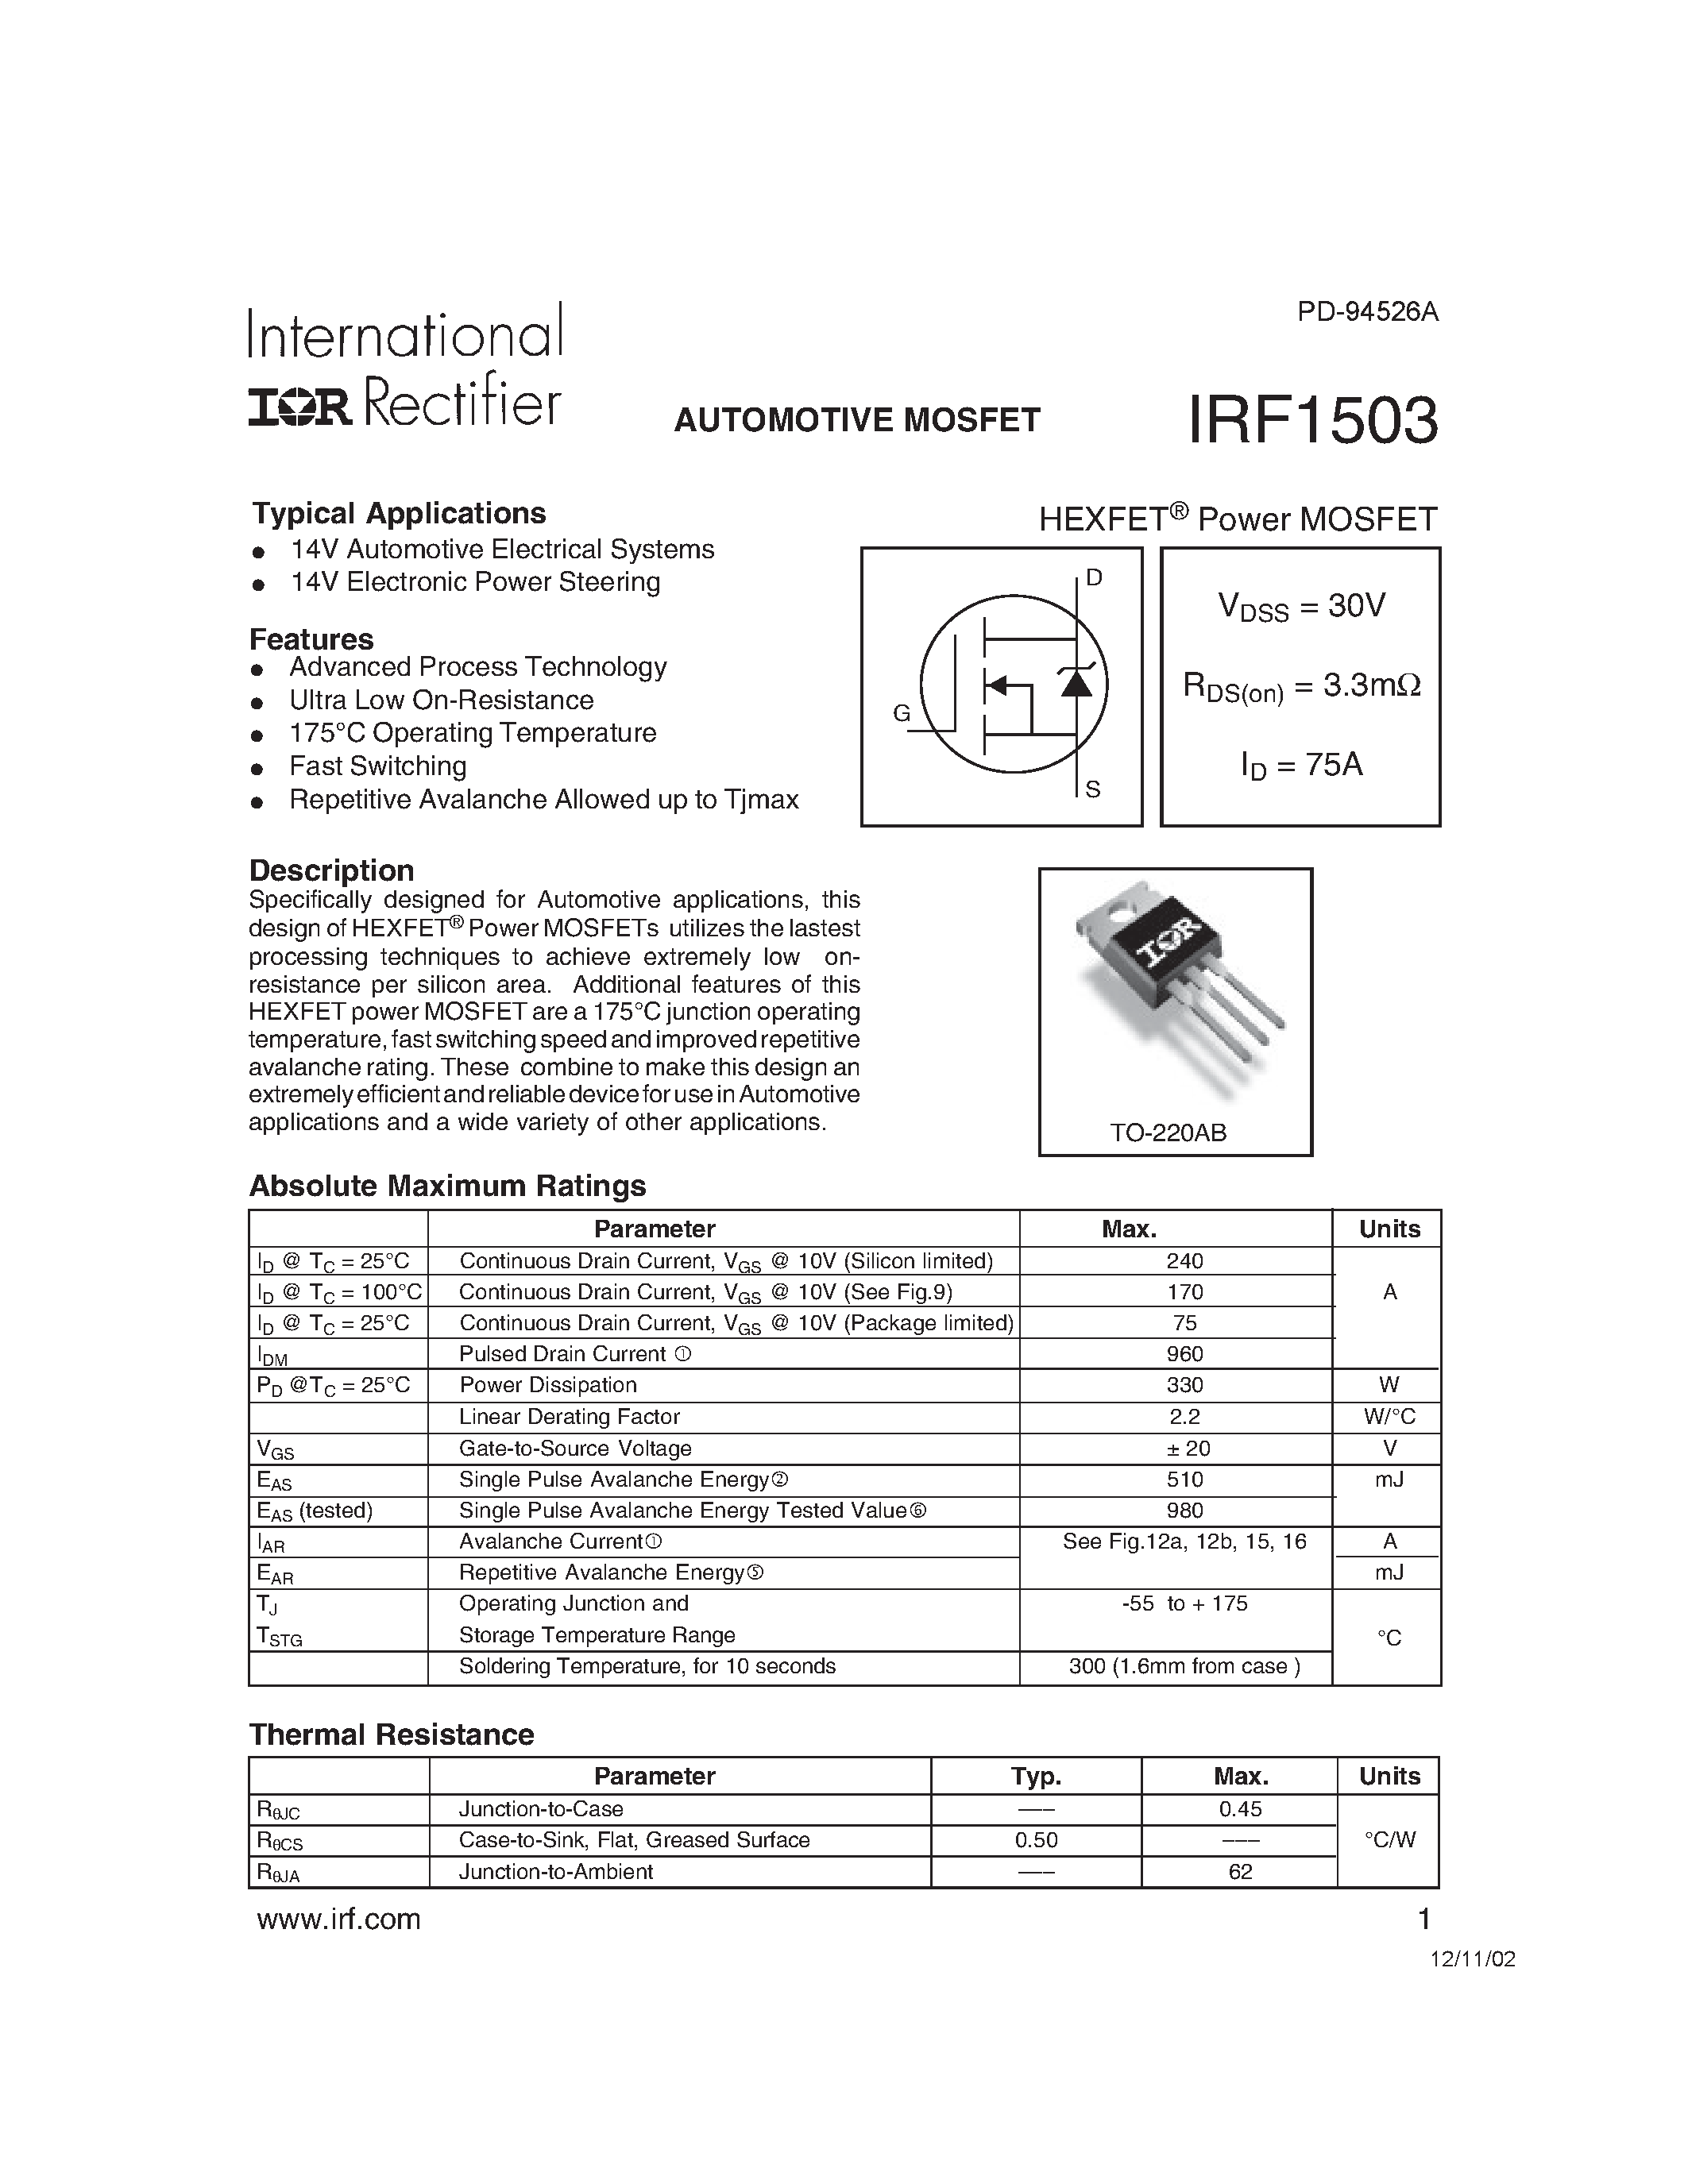 Datasheet IRF1503 - AUTOMOTIVE MOSFET page 1